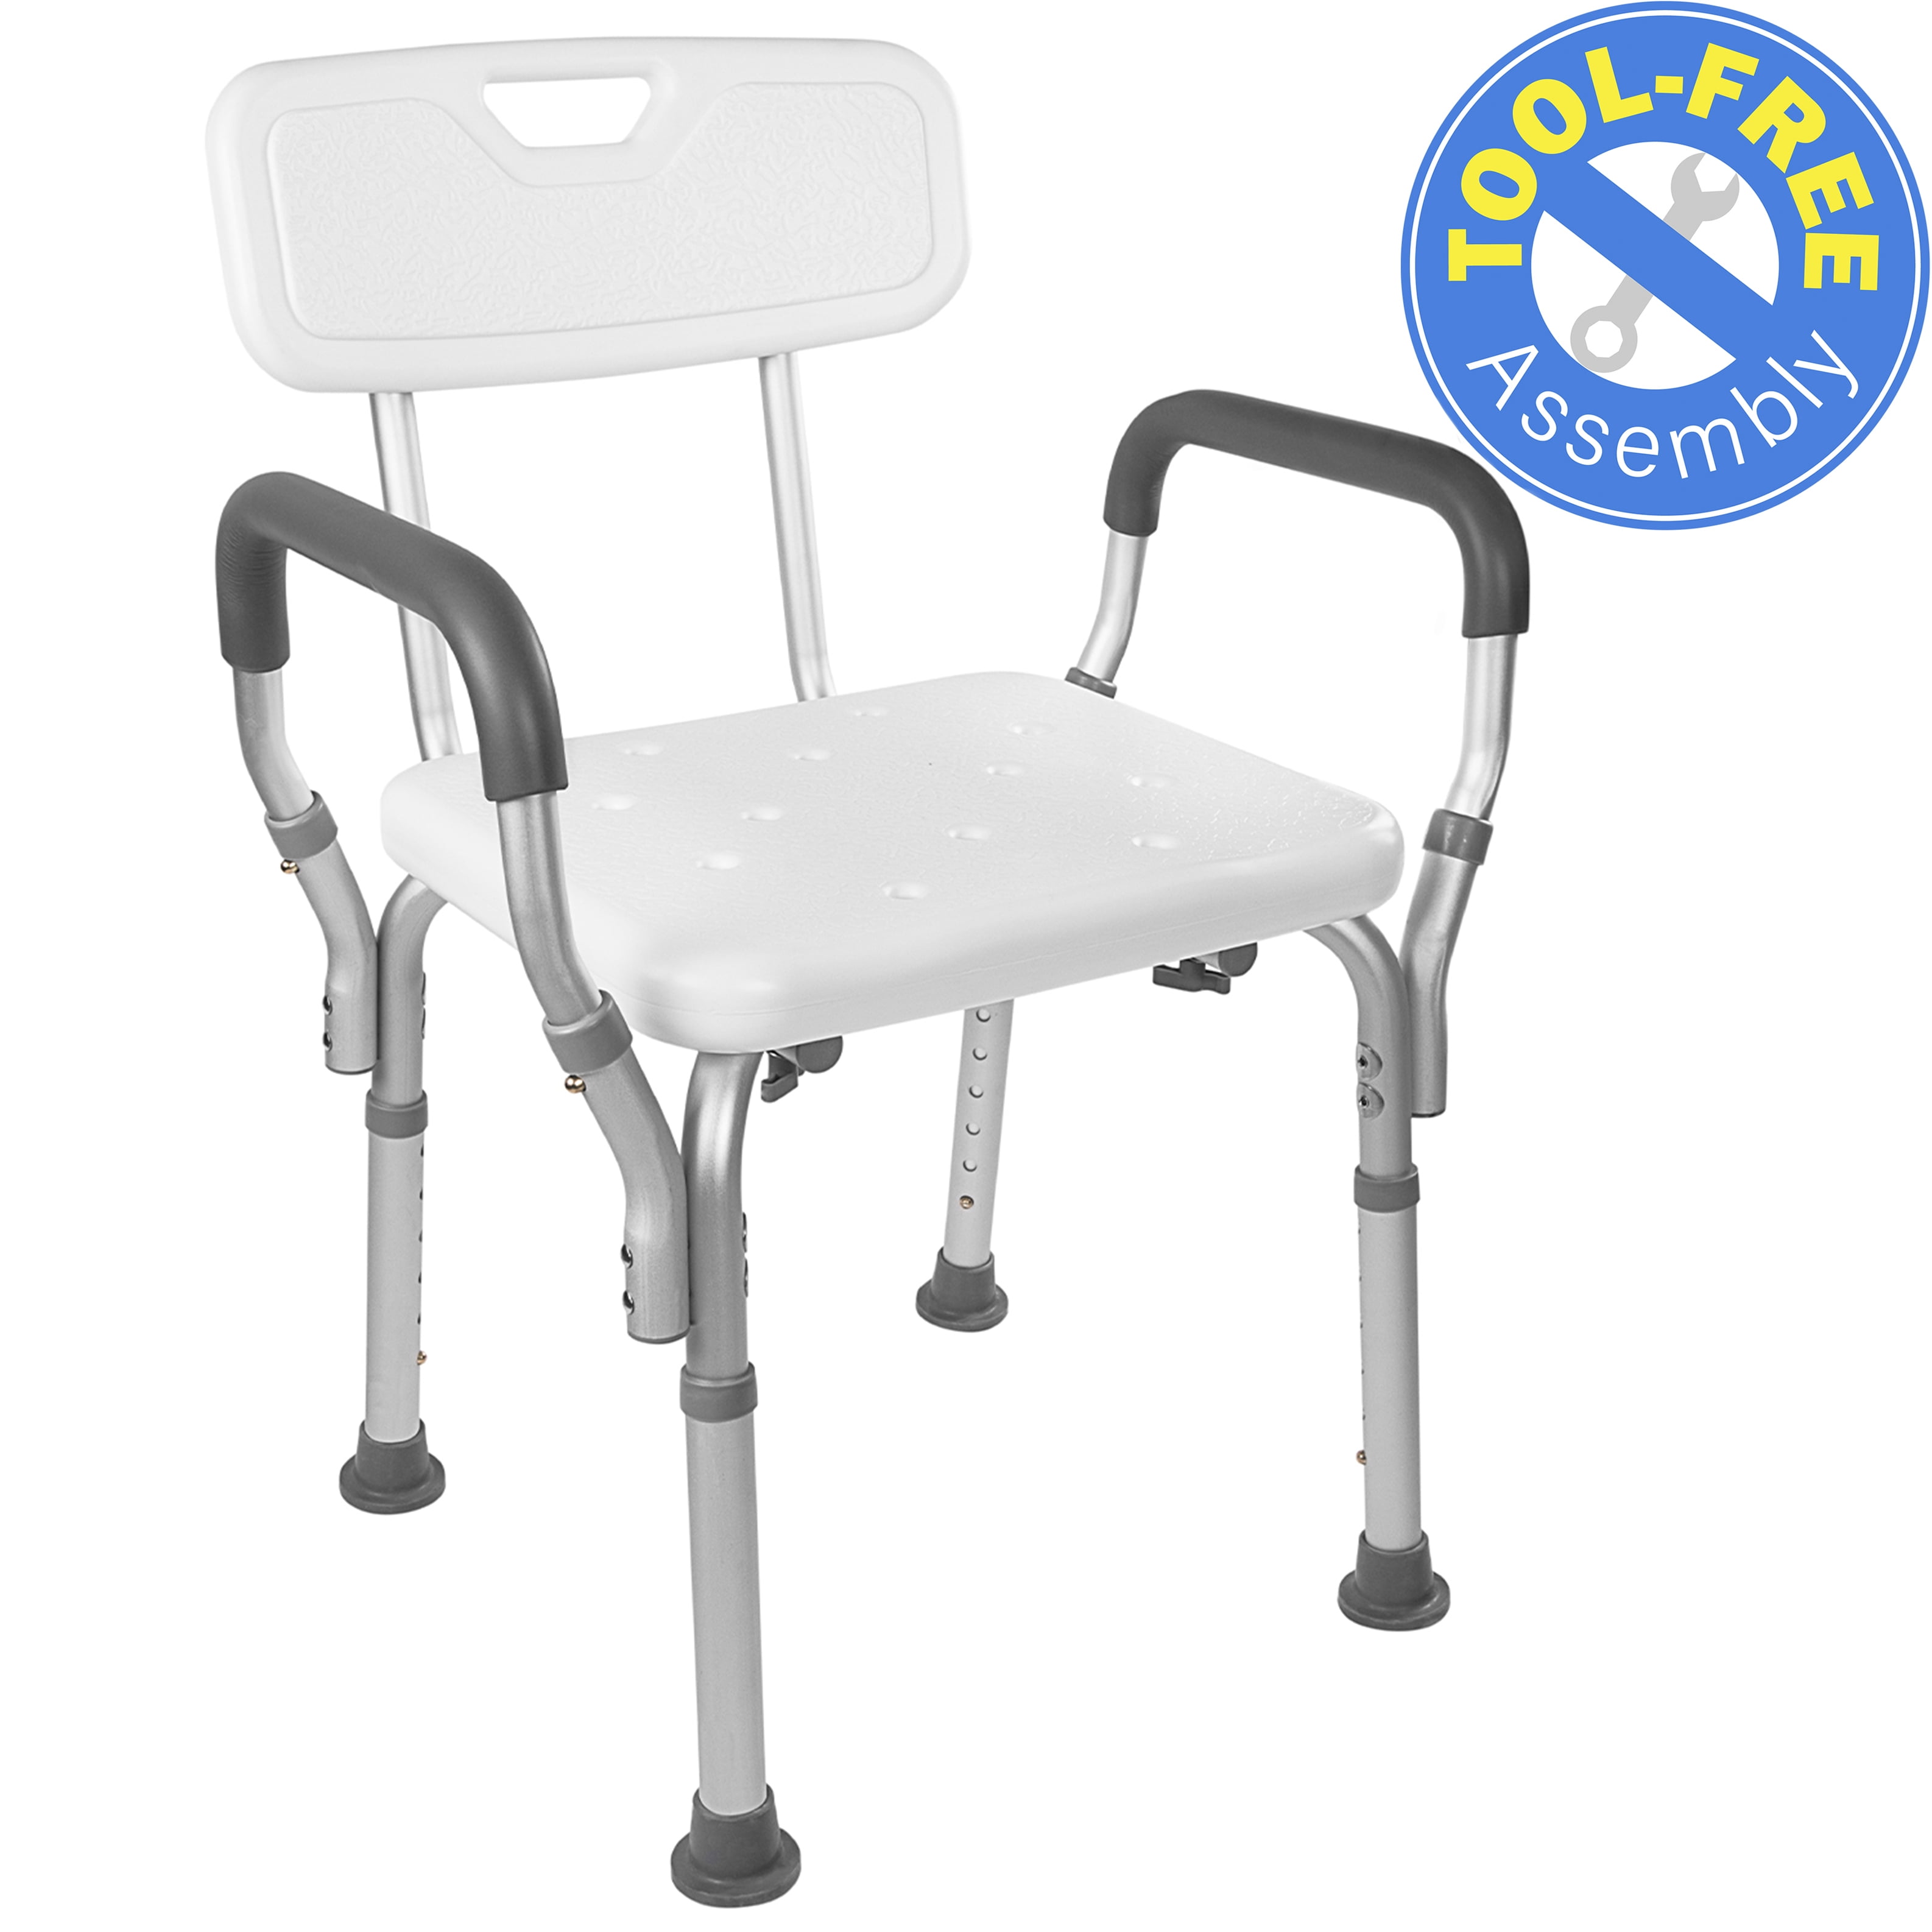 Vaunn Medical Tool Free Assembly Spa, Bathtub Lift Chair For Seniors